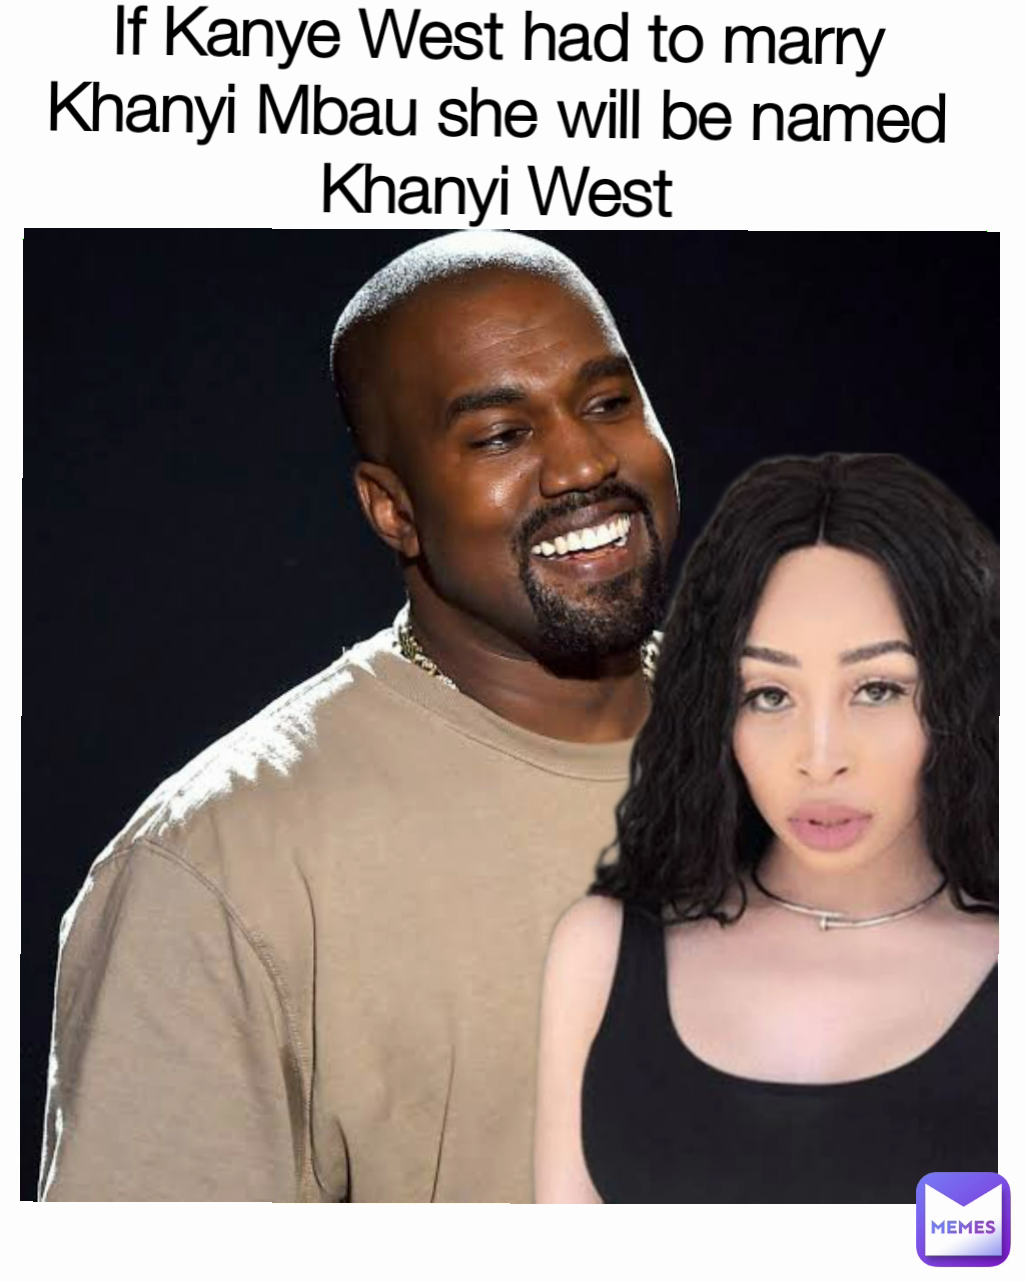 If Kanye West had to marry Khanyi Mbau she will be named Khanyi West